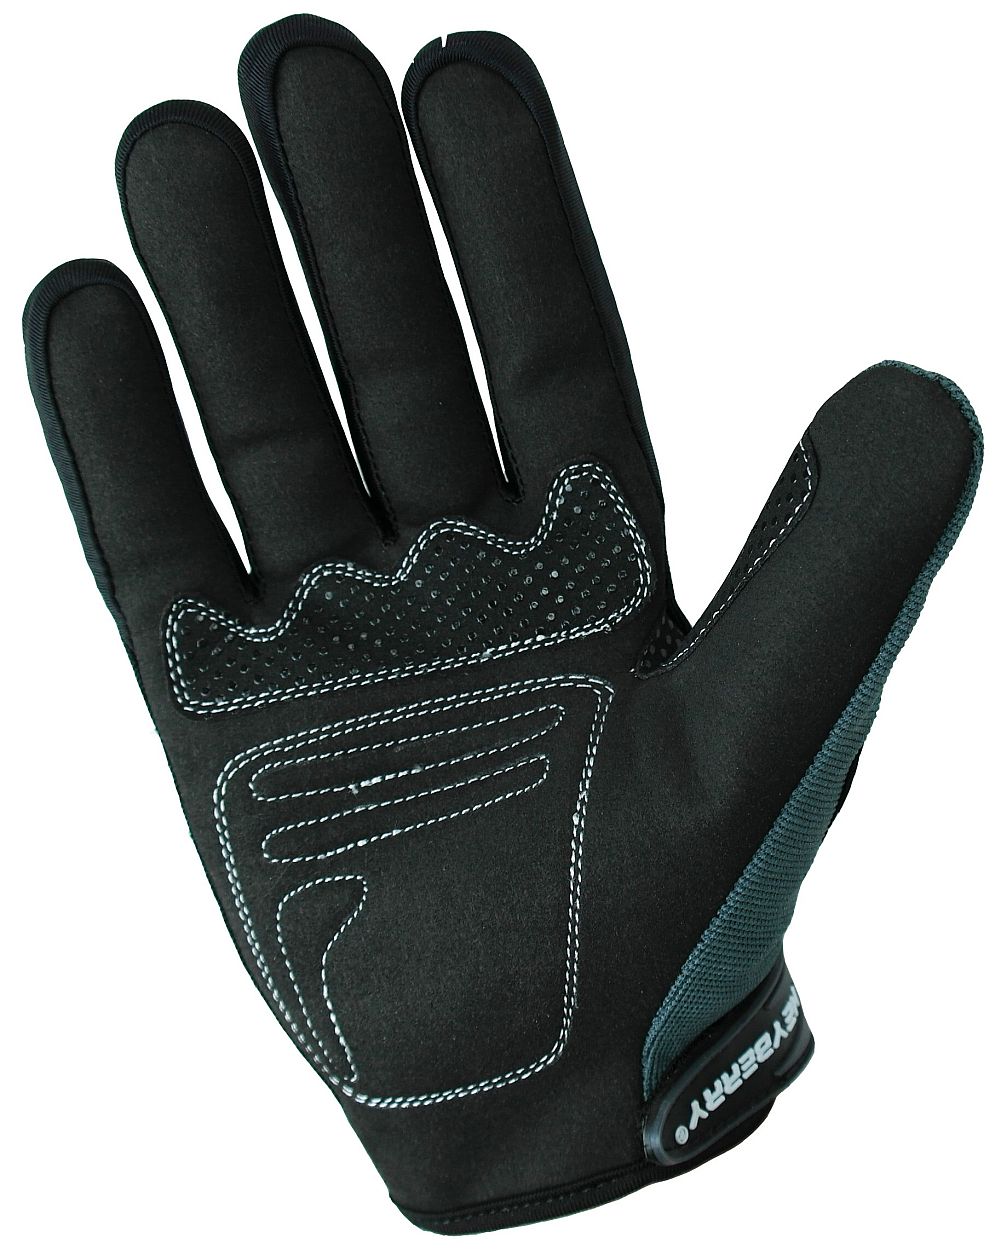 Heyberry Motocross MTB MX Handschuhe schwarz grau Gr. S - XXL